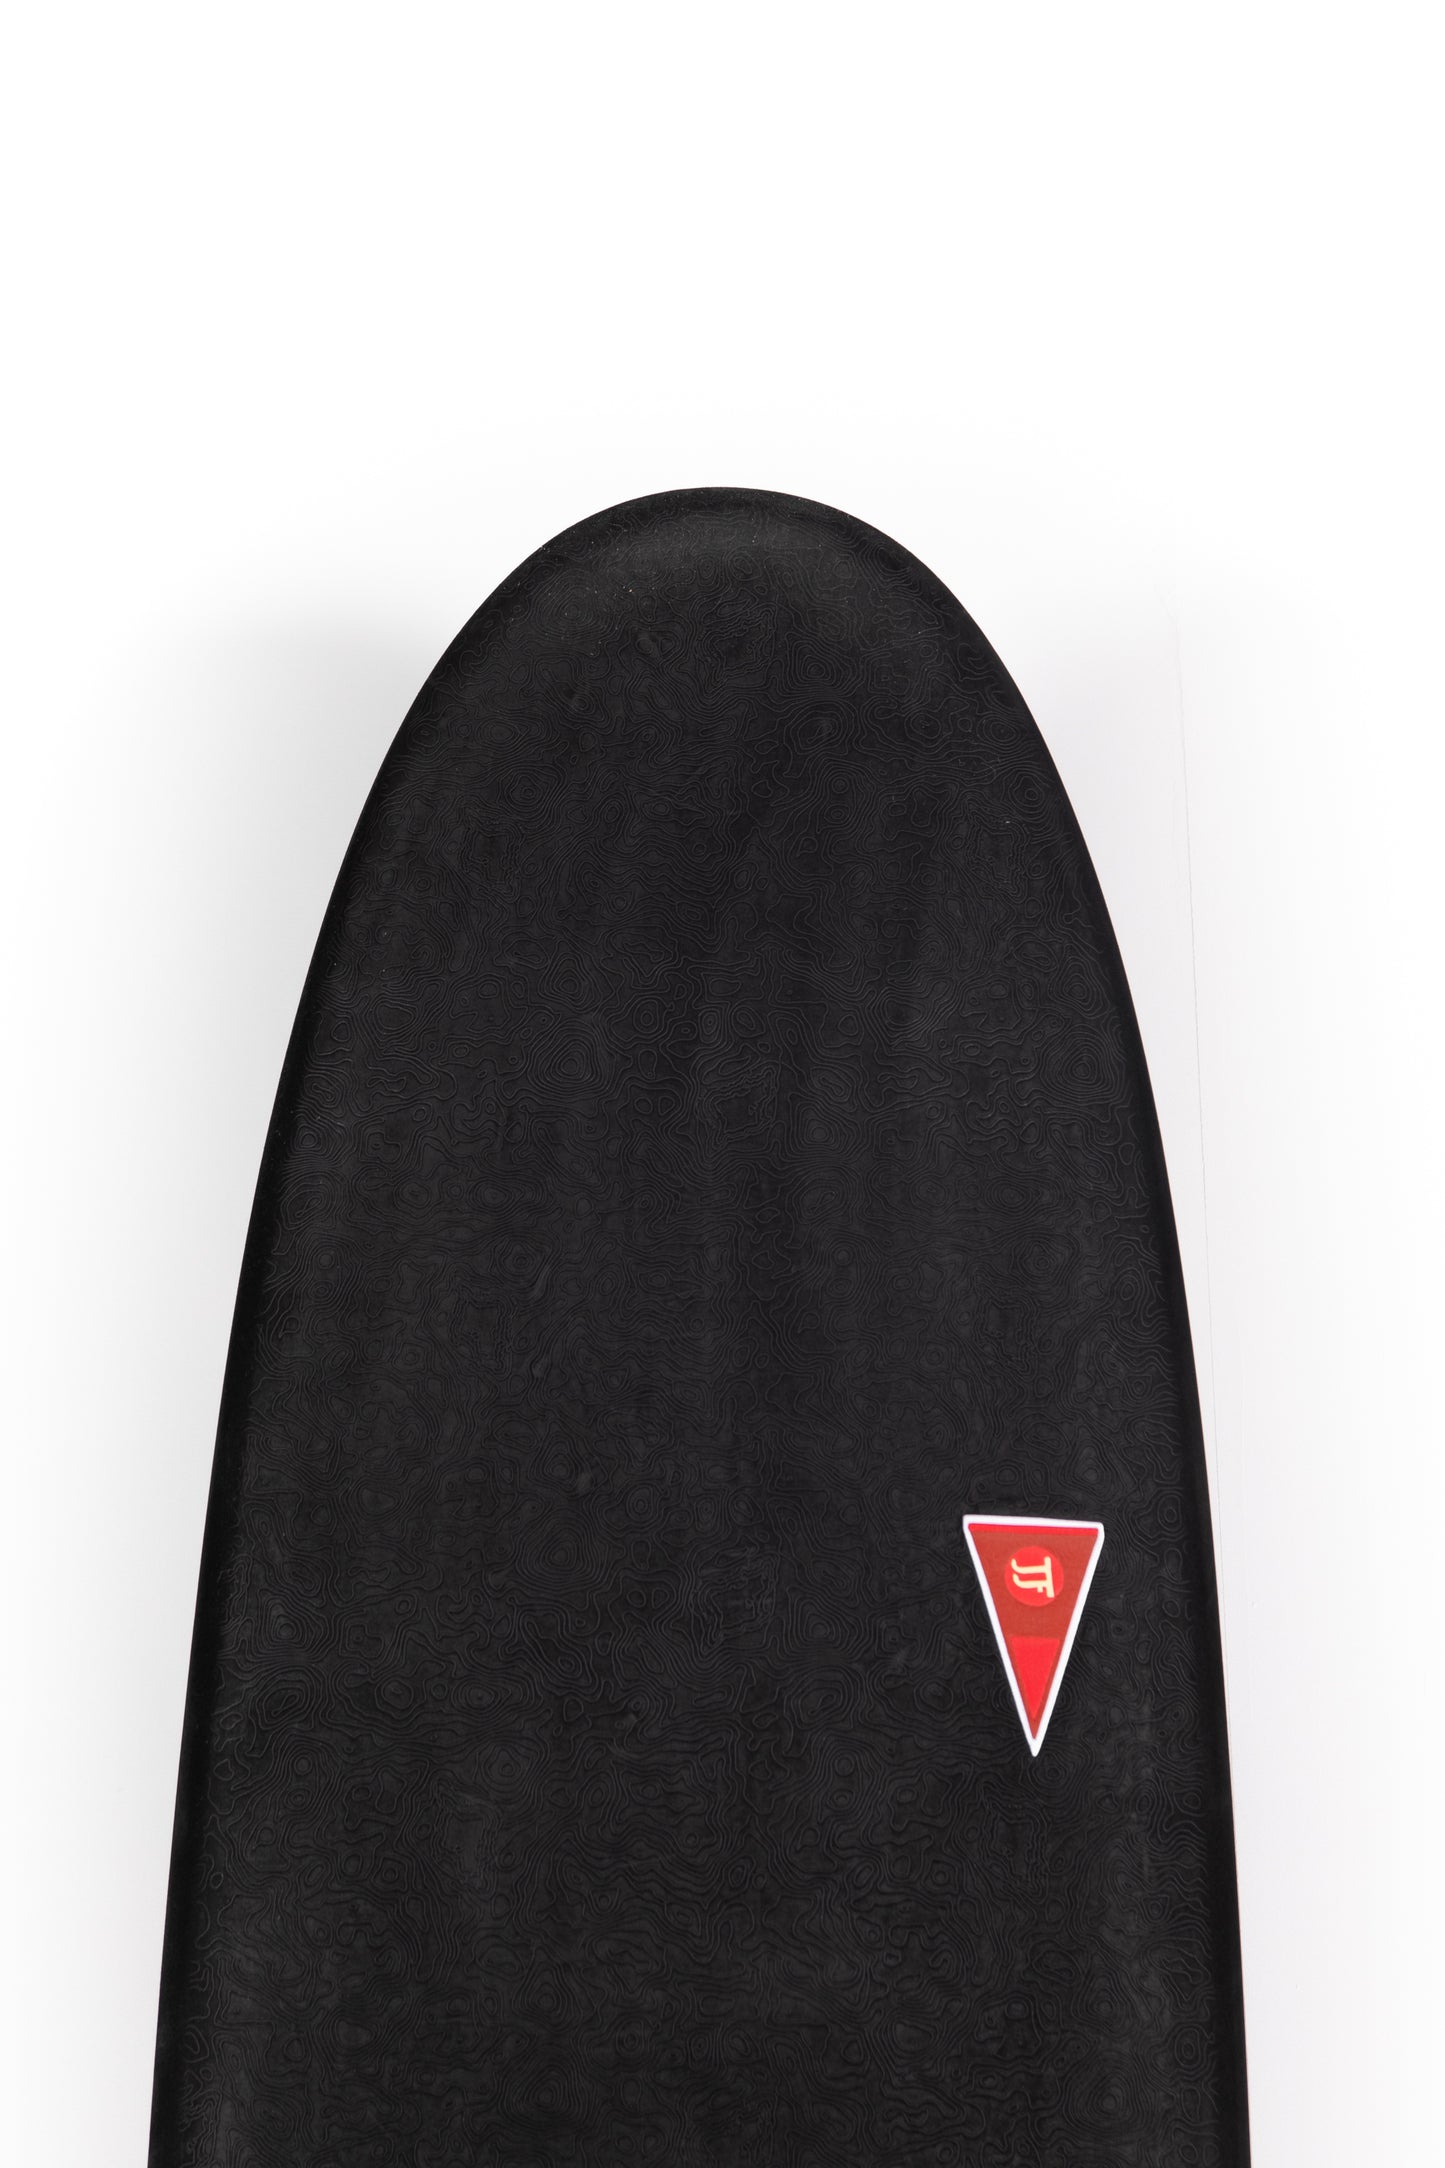 
                  
                    JJF SURFBOARD - THE LOG 8.0 BLACK
                  
                